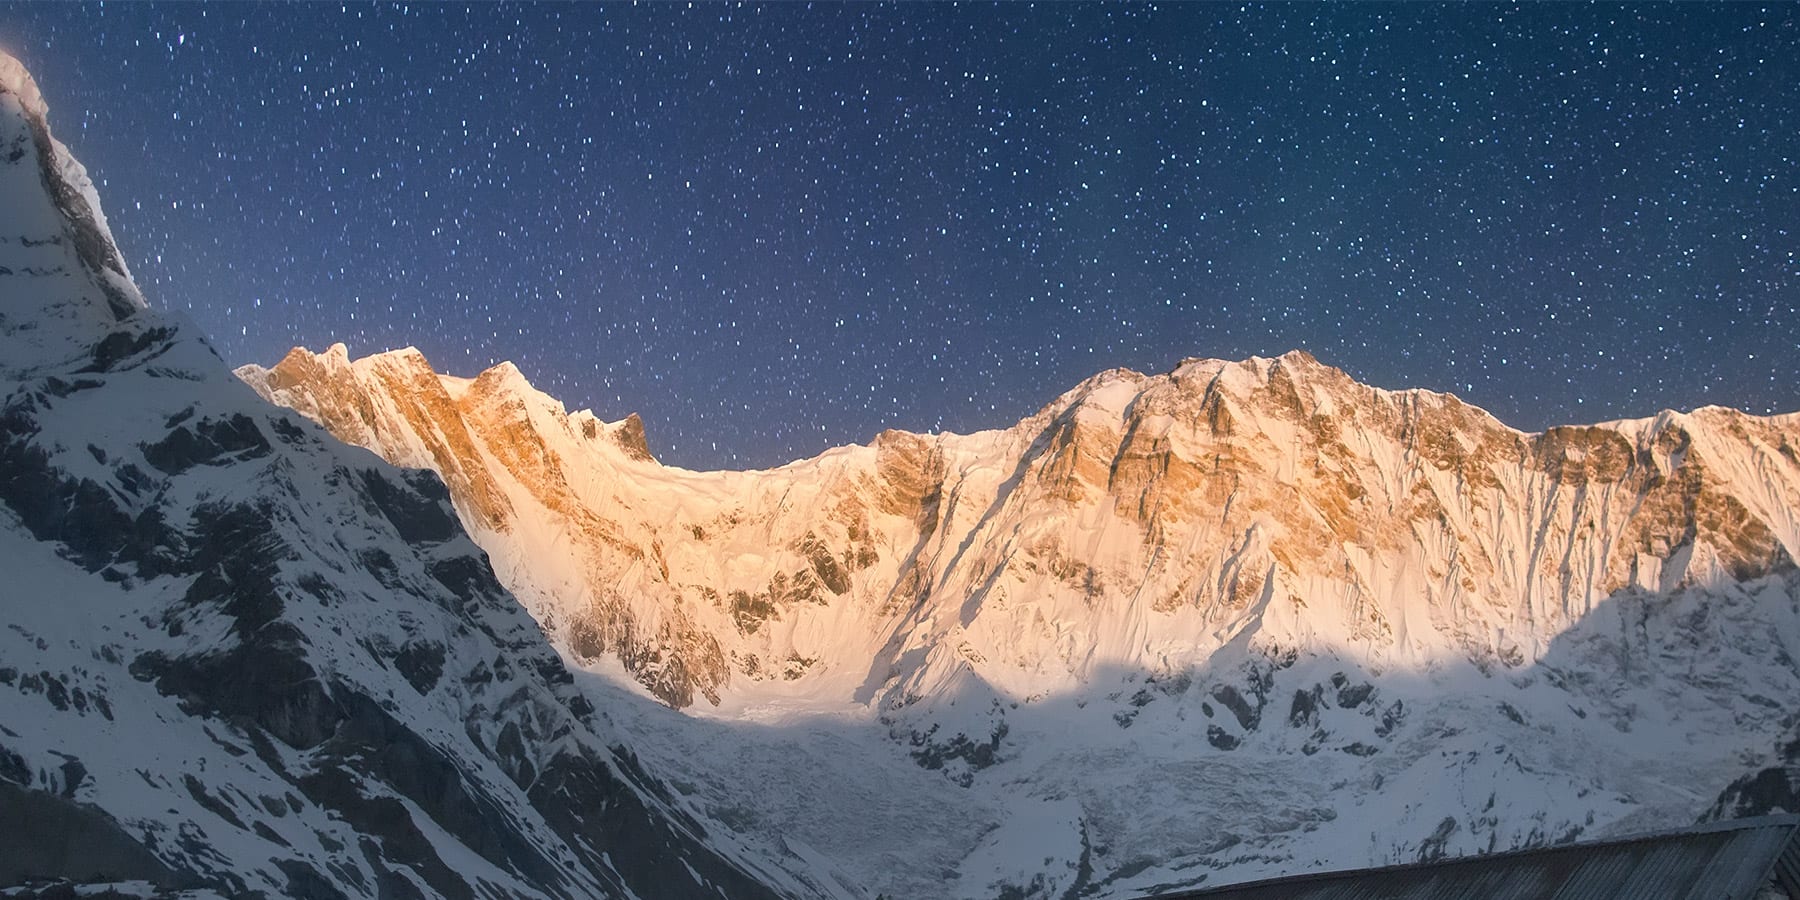 Evening scene: starry sky framed by snowy Annapurna mountain peaks